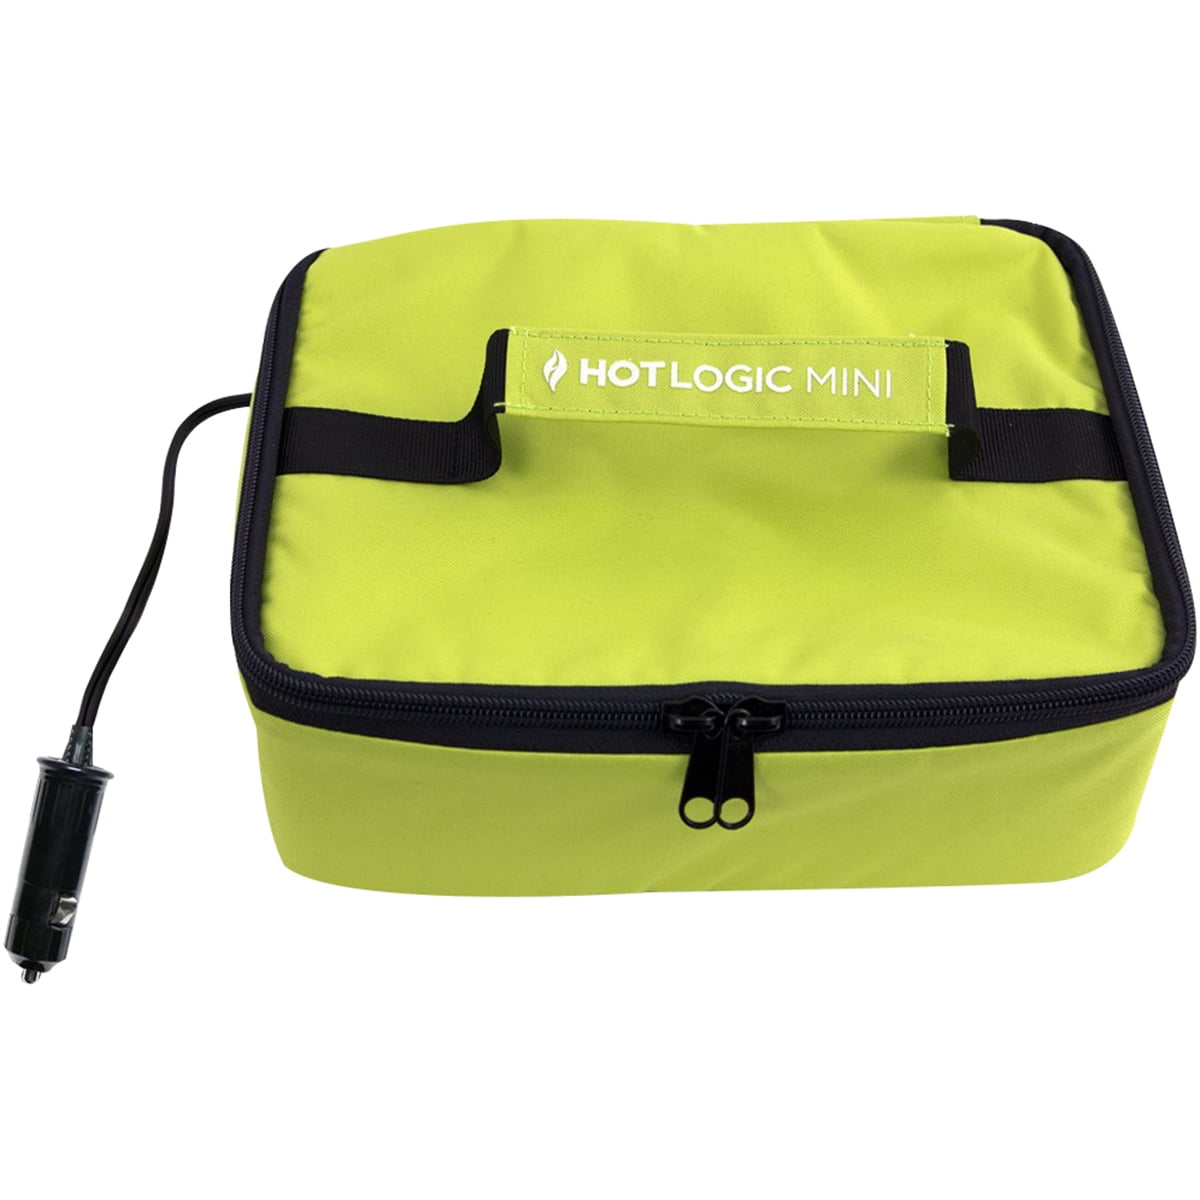 Hot Logic Mini Personal Portable Oven Electric 120v New Open Box